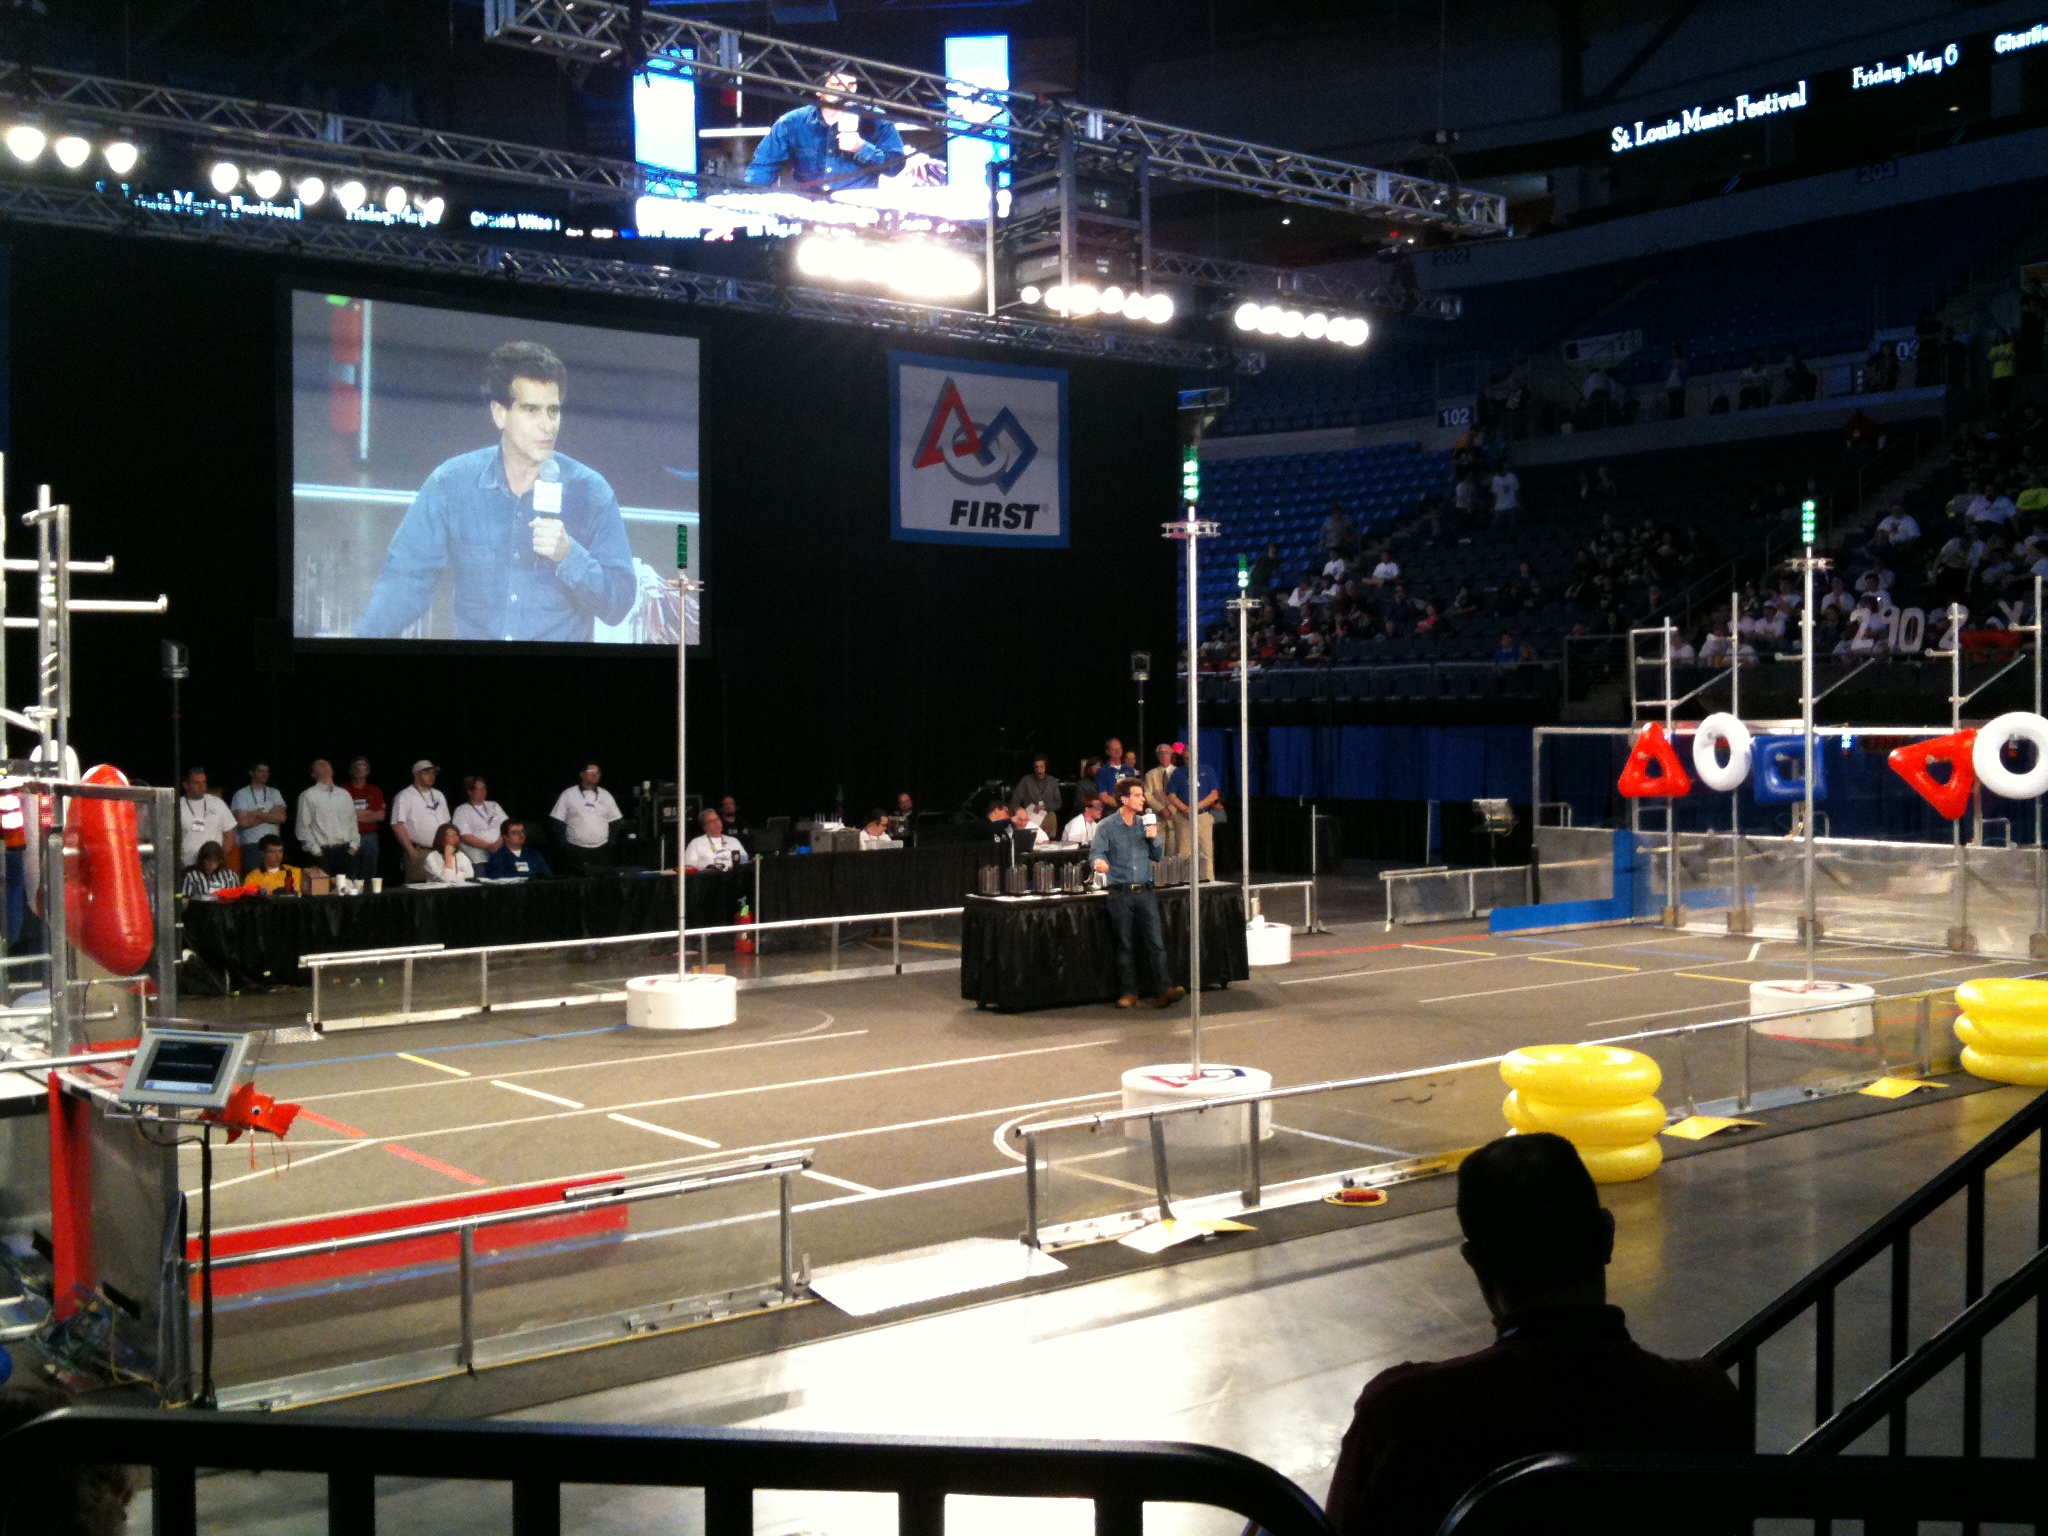  FIRST founder, Dean Kamen, speaking at the 2011 St. Louis Regional 